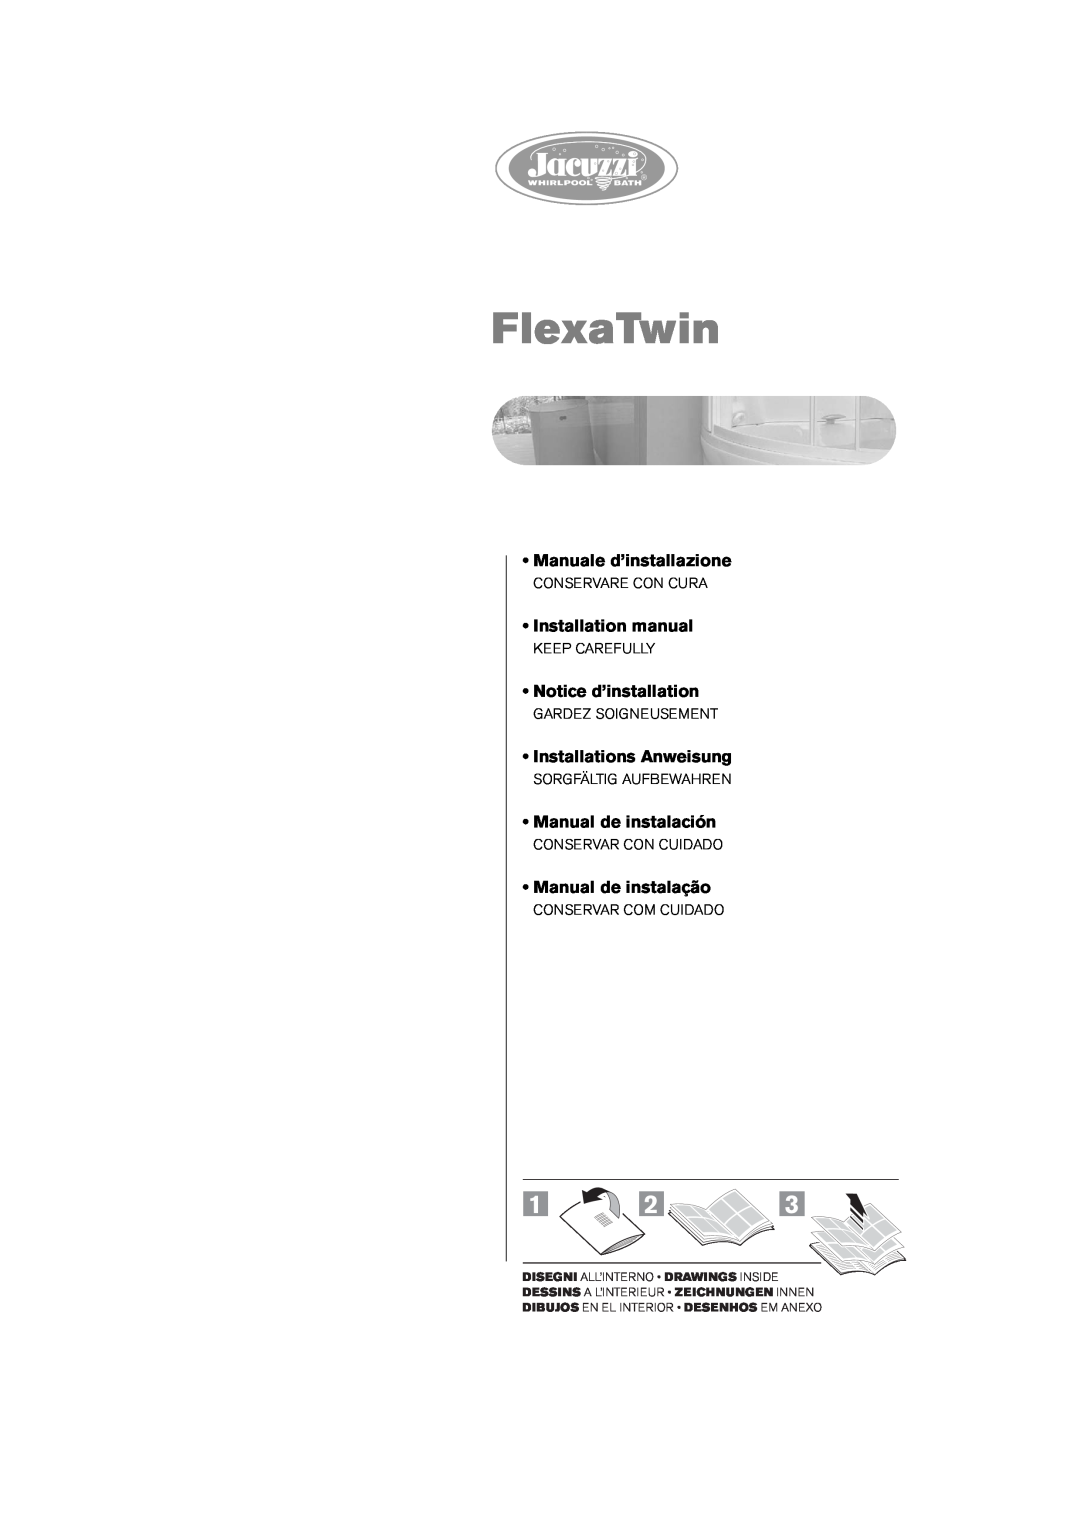 Jacuzzi ELT 10 installation manual FlexaTwin, Conservare Con Cura, Keep Carefully, Gardez Soigneusement 